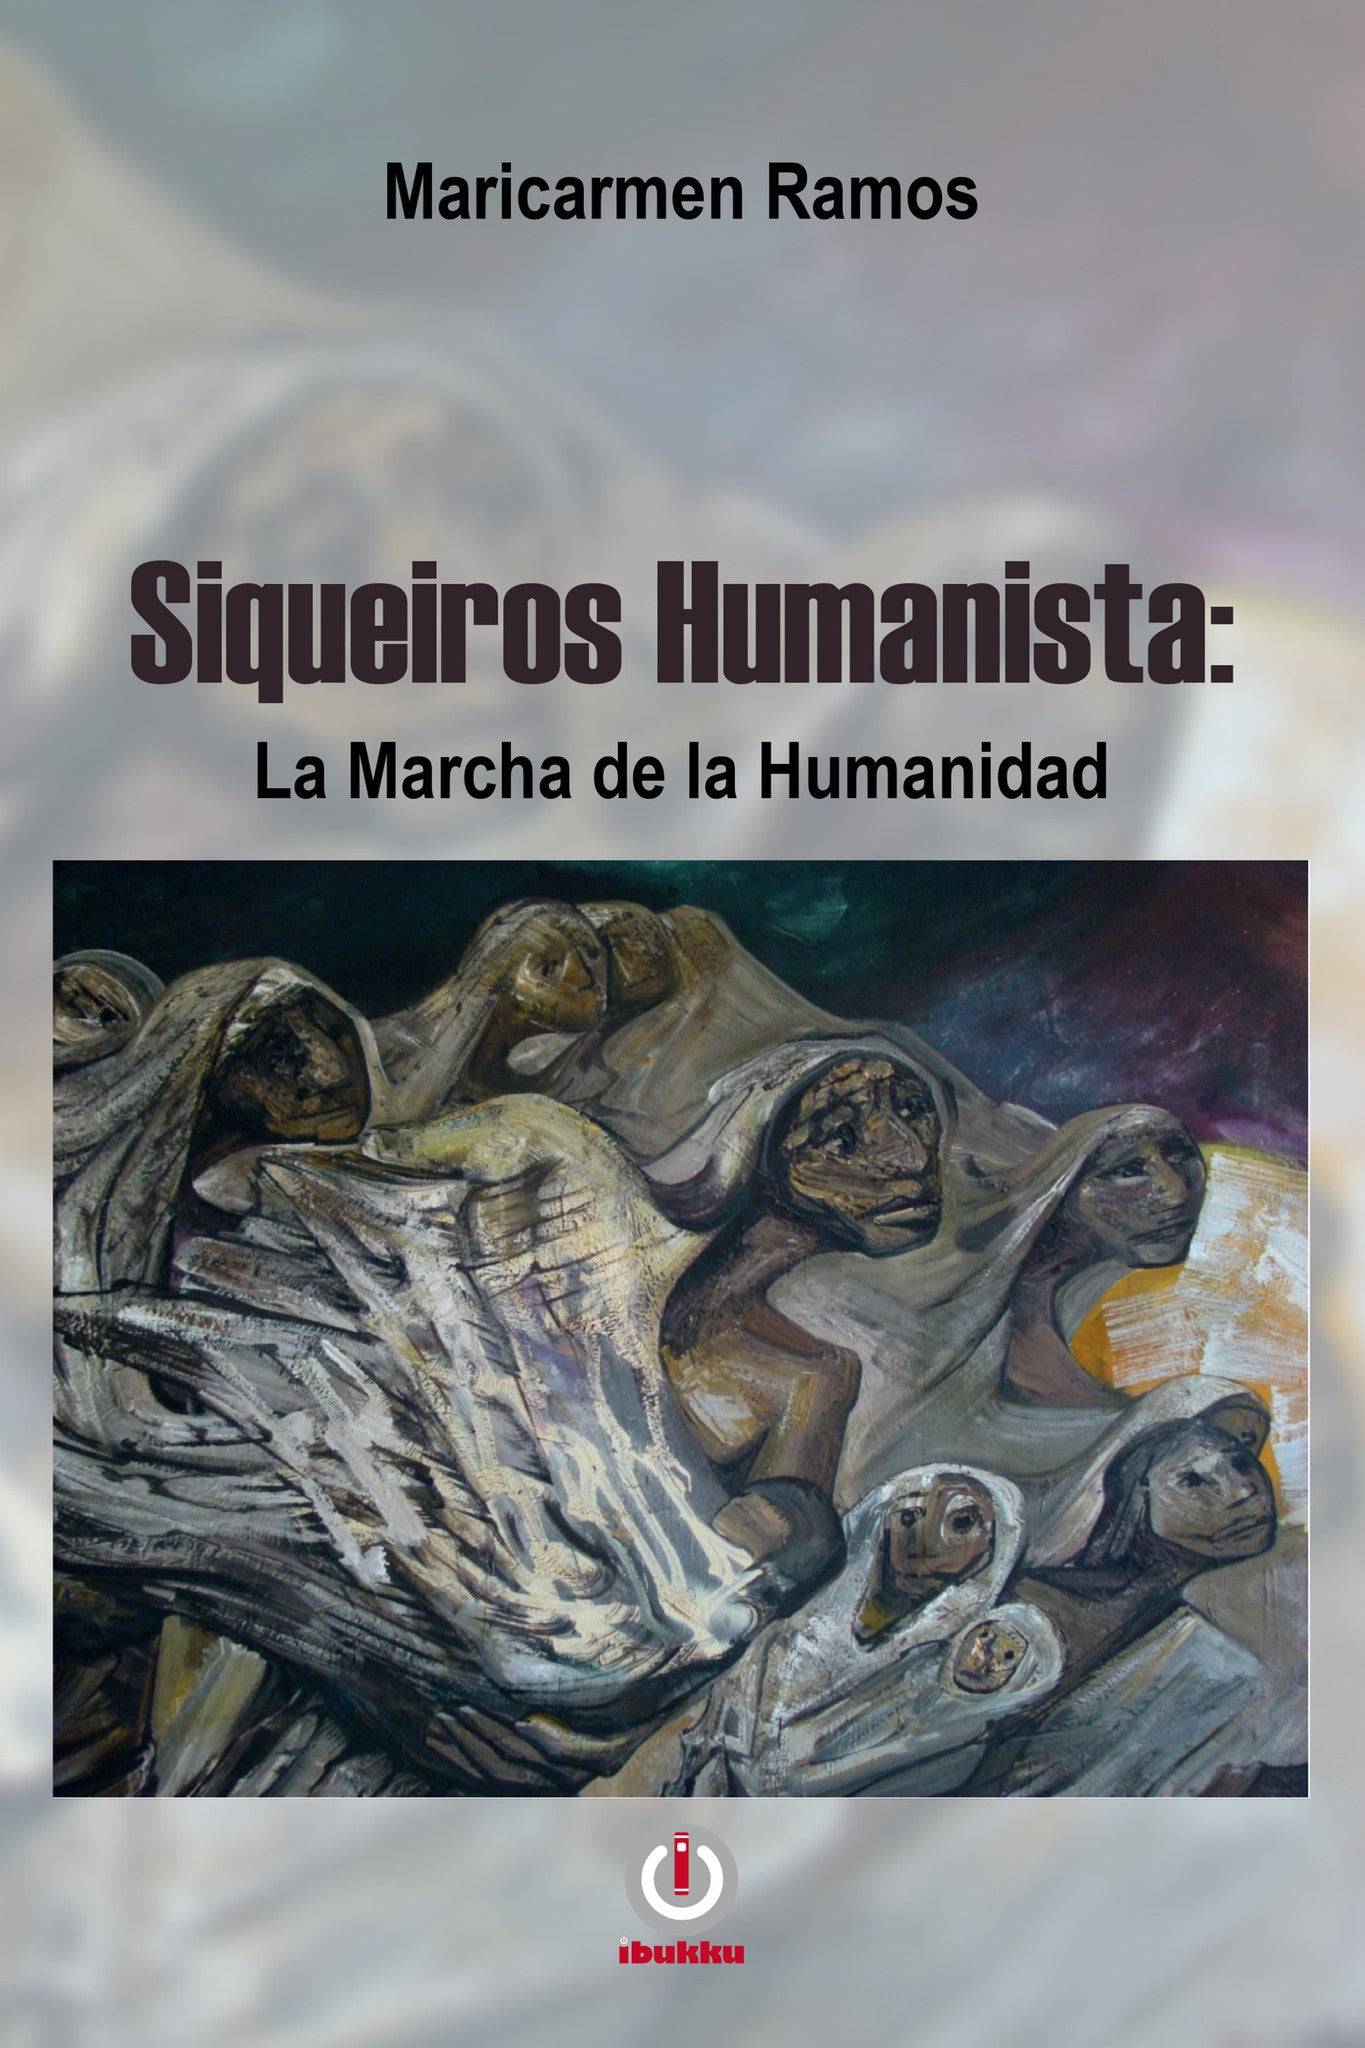 Siqueiros Humanista: La marcha de la humanidad - ibukku, LLC